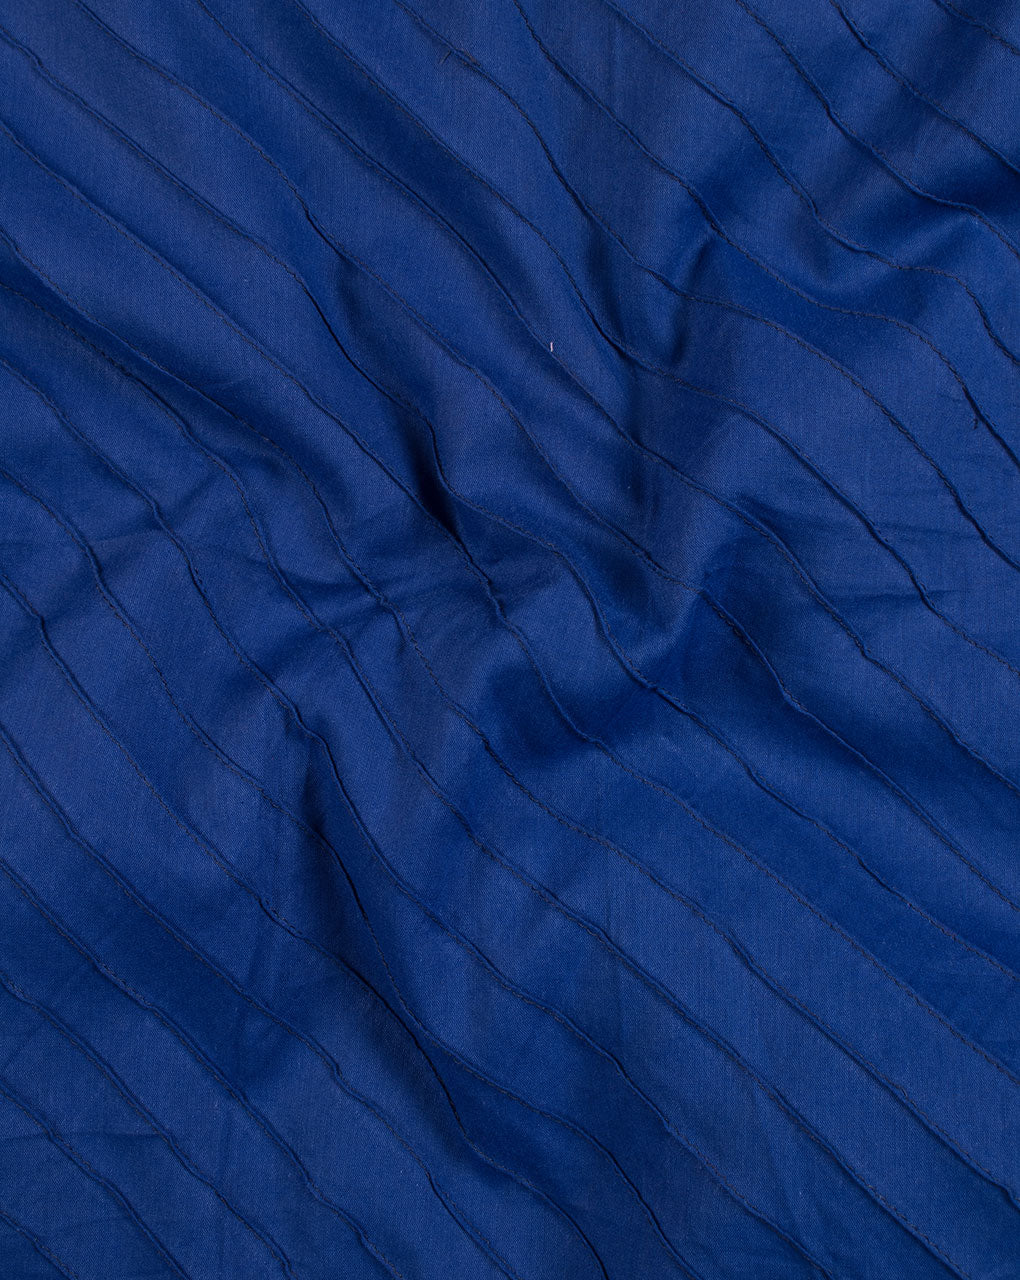 Royal Blue Stripes Pattern Pin-Tucks Cotton Fabric - Fabriclore.com